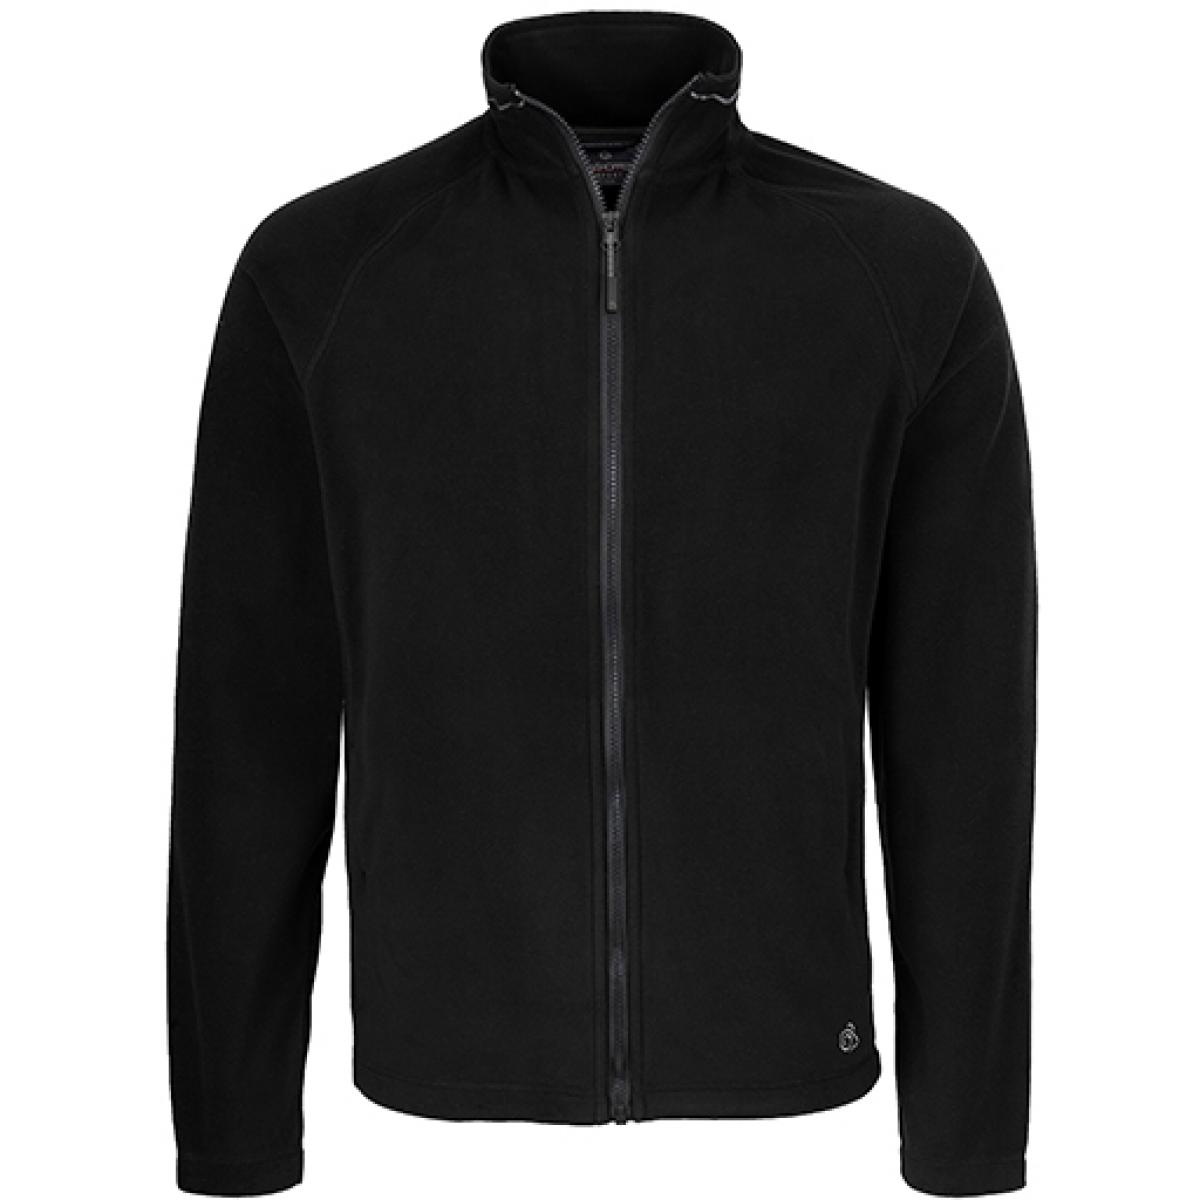 Hersteller: Craghoppers Expert Herstellernummer: CEA001 Artikelbezeichnung: Expert Corey 200 Fleece Jacket Farbe: Black